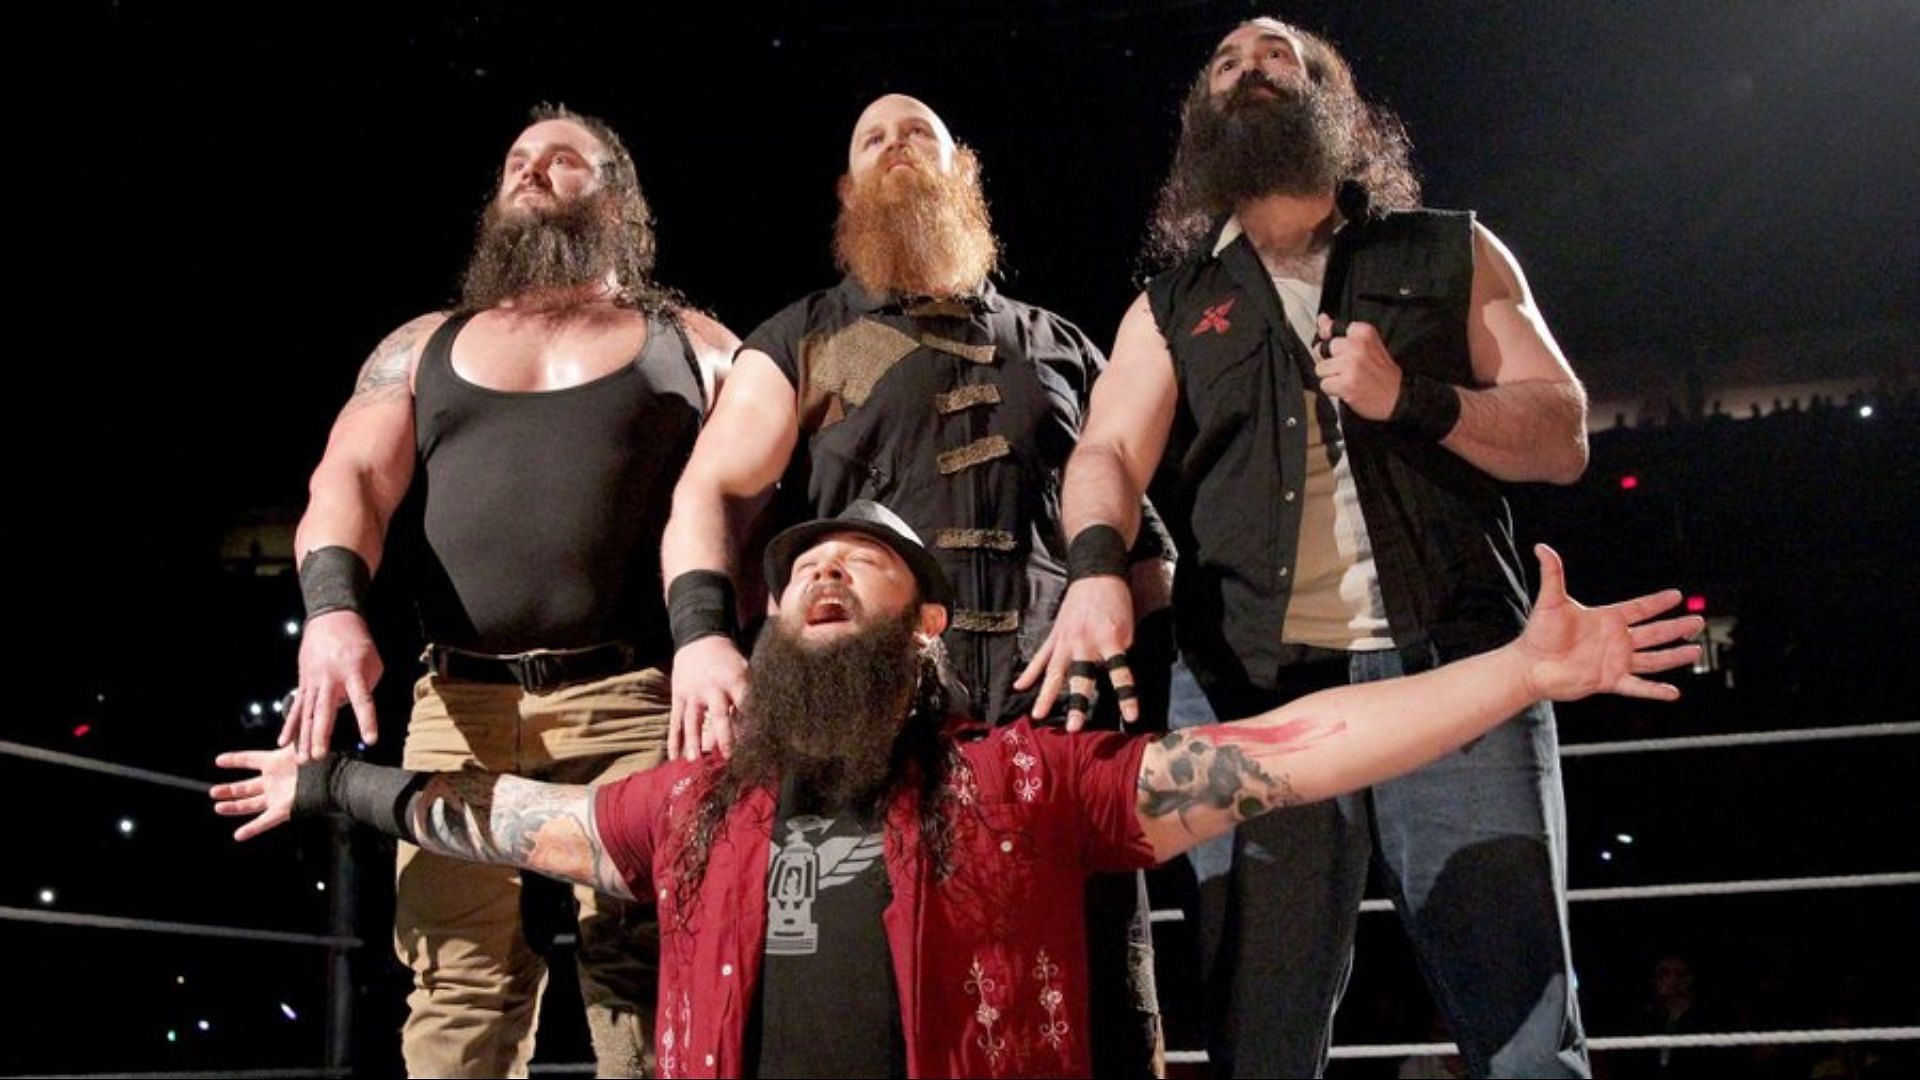 The Wyatt Family were a faction led by Bray Wyatt